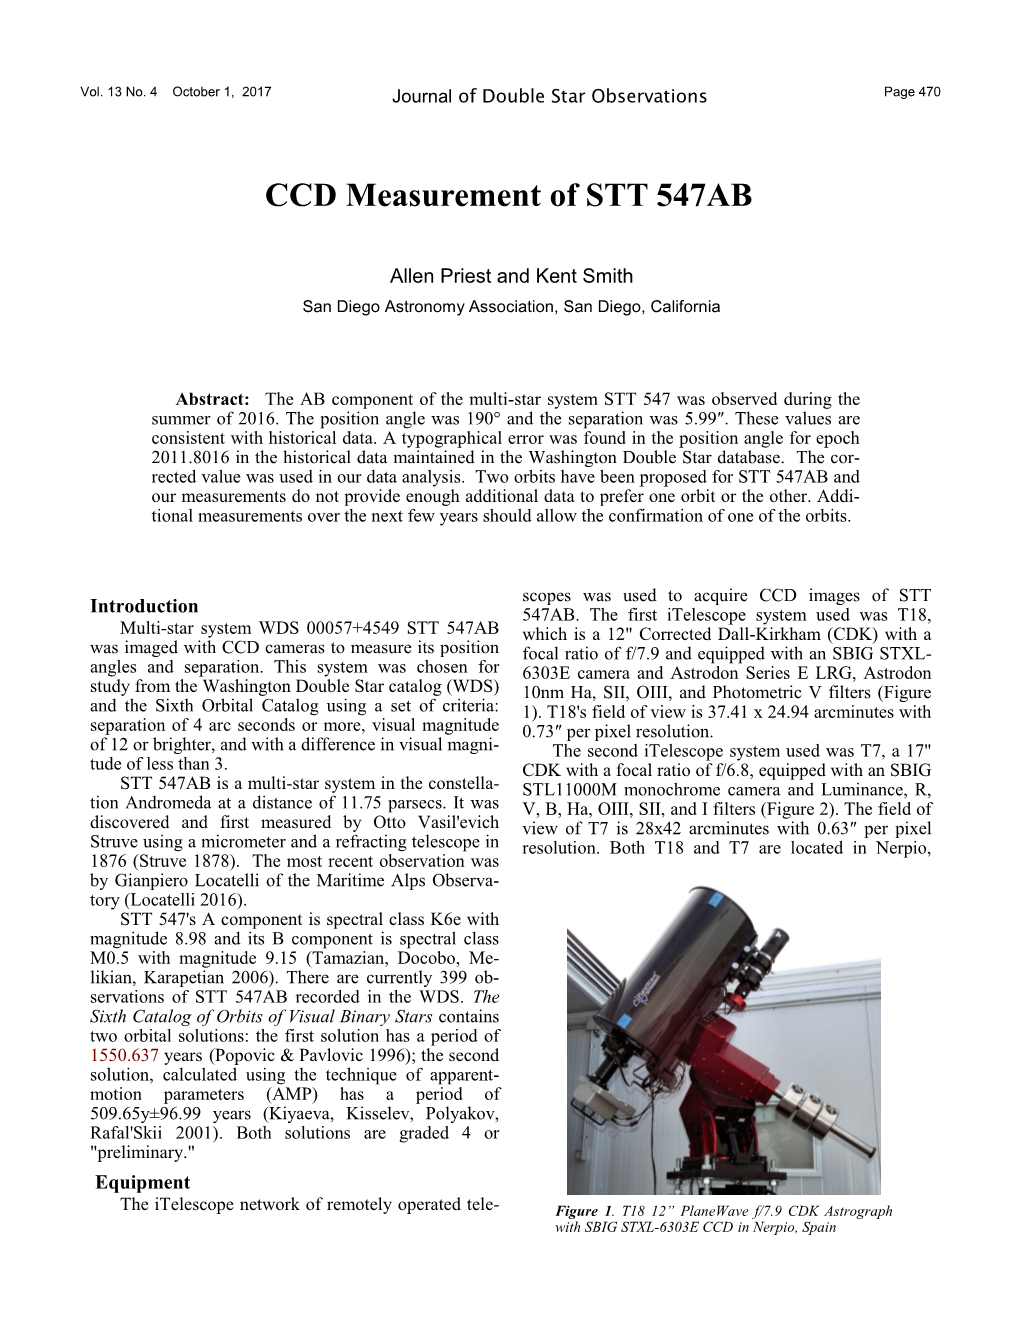 CCD Measurement of STT 547AB